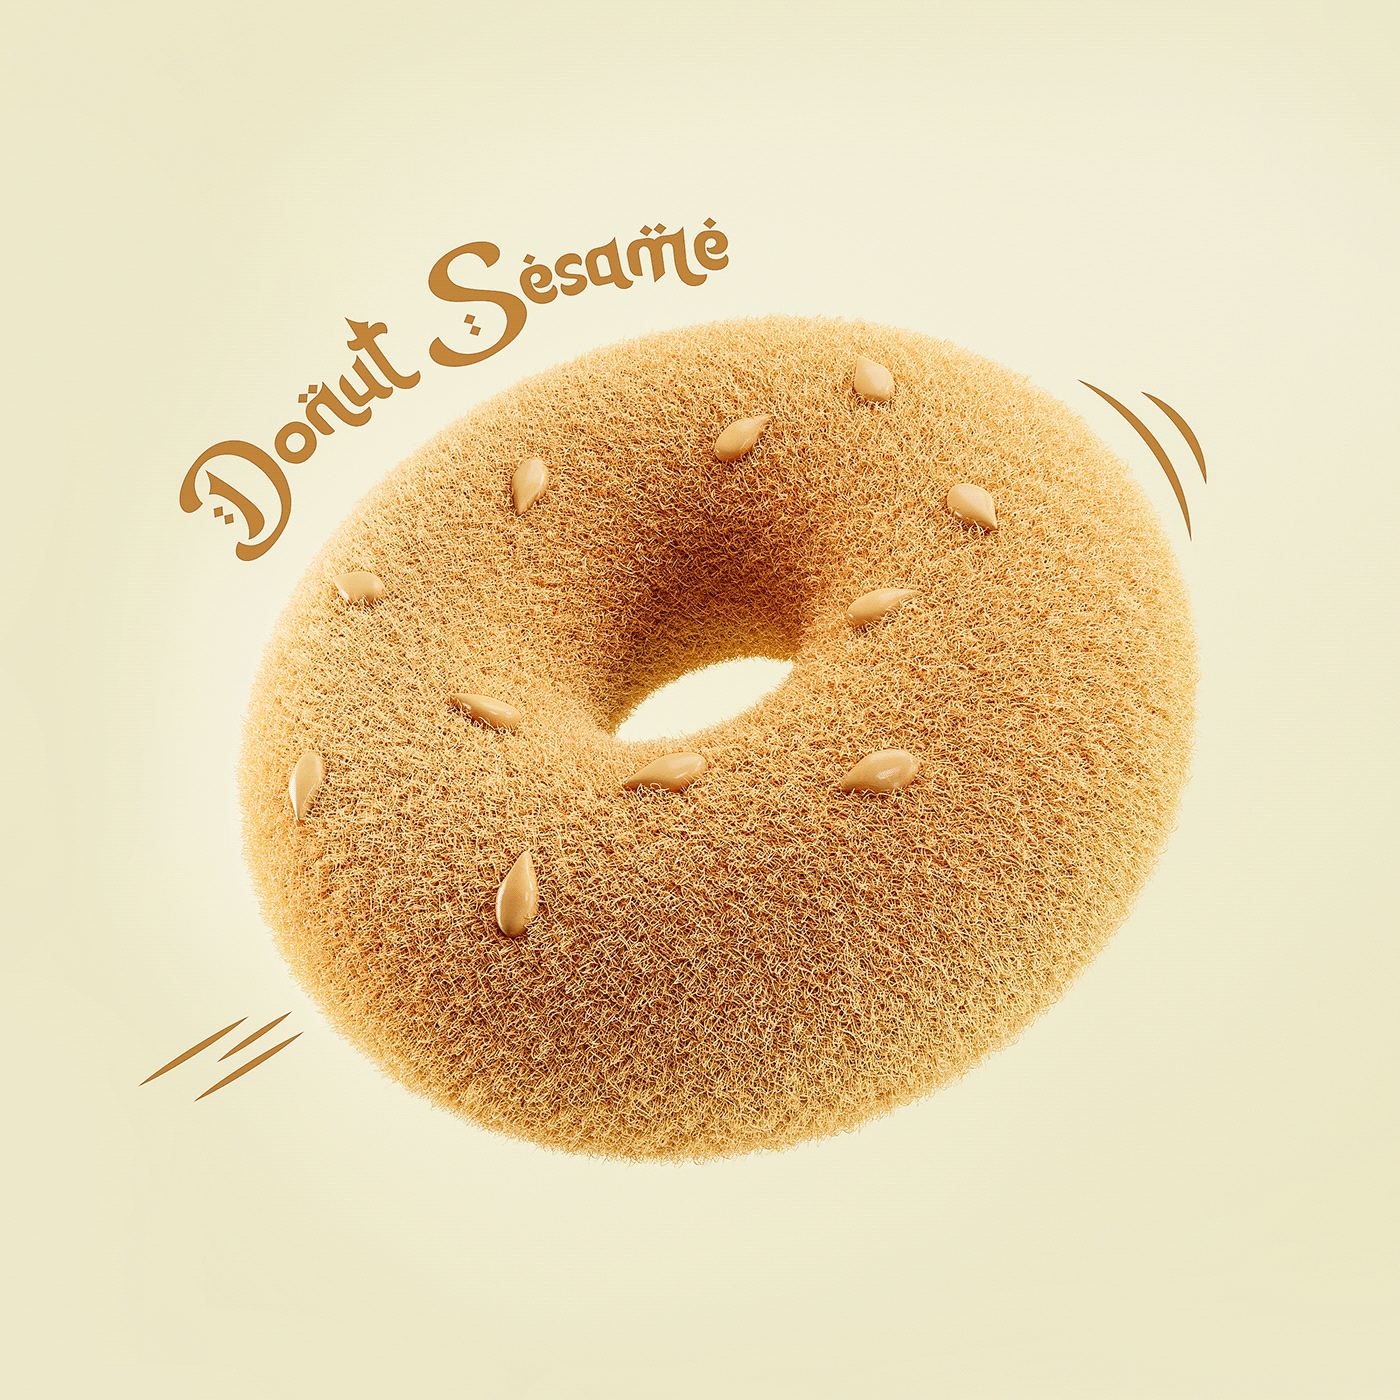 donut cake jam cupcake bakery Food  3D blender photoshop CGI